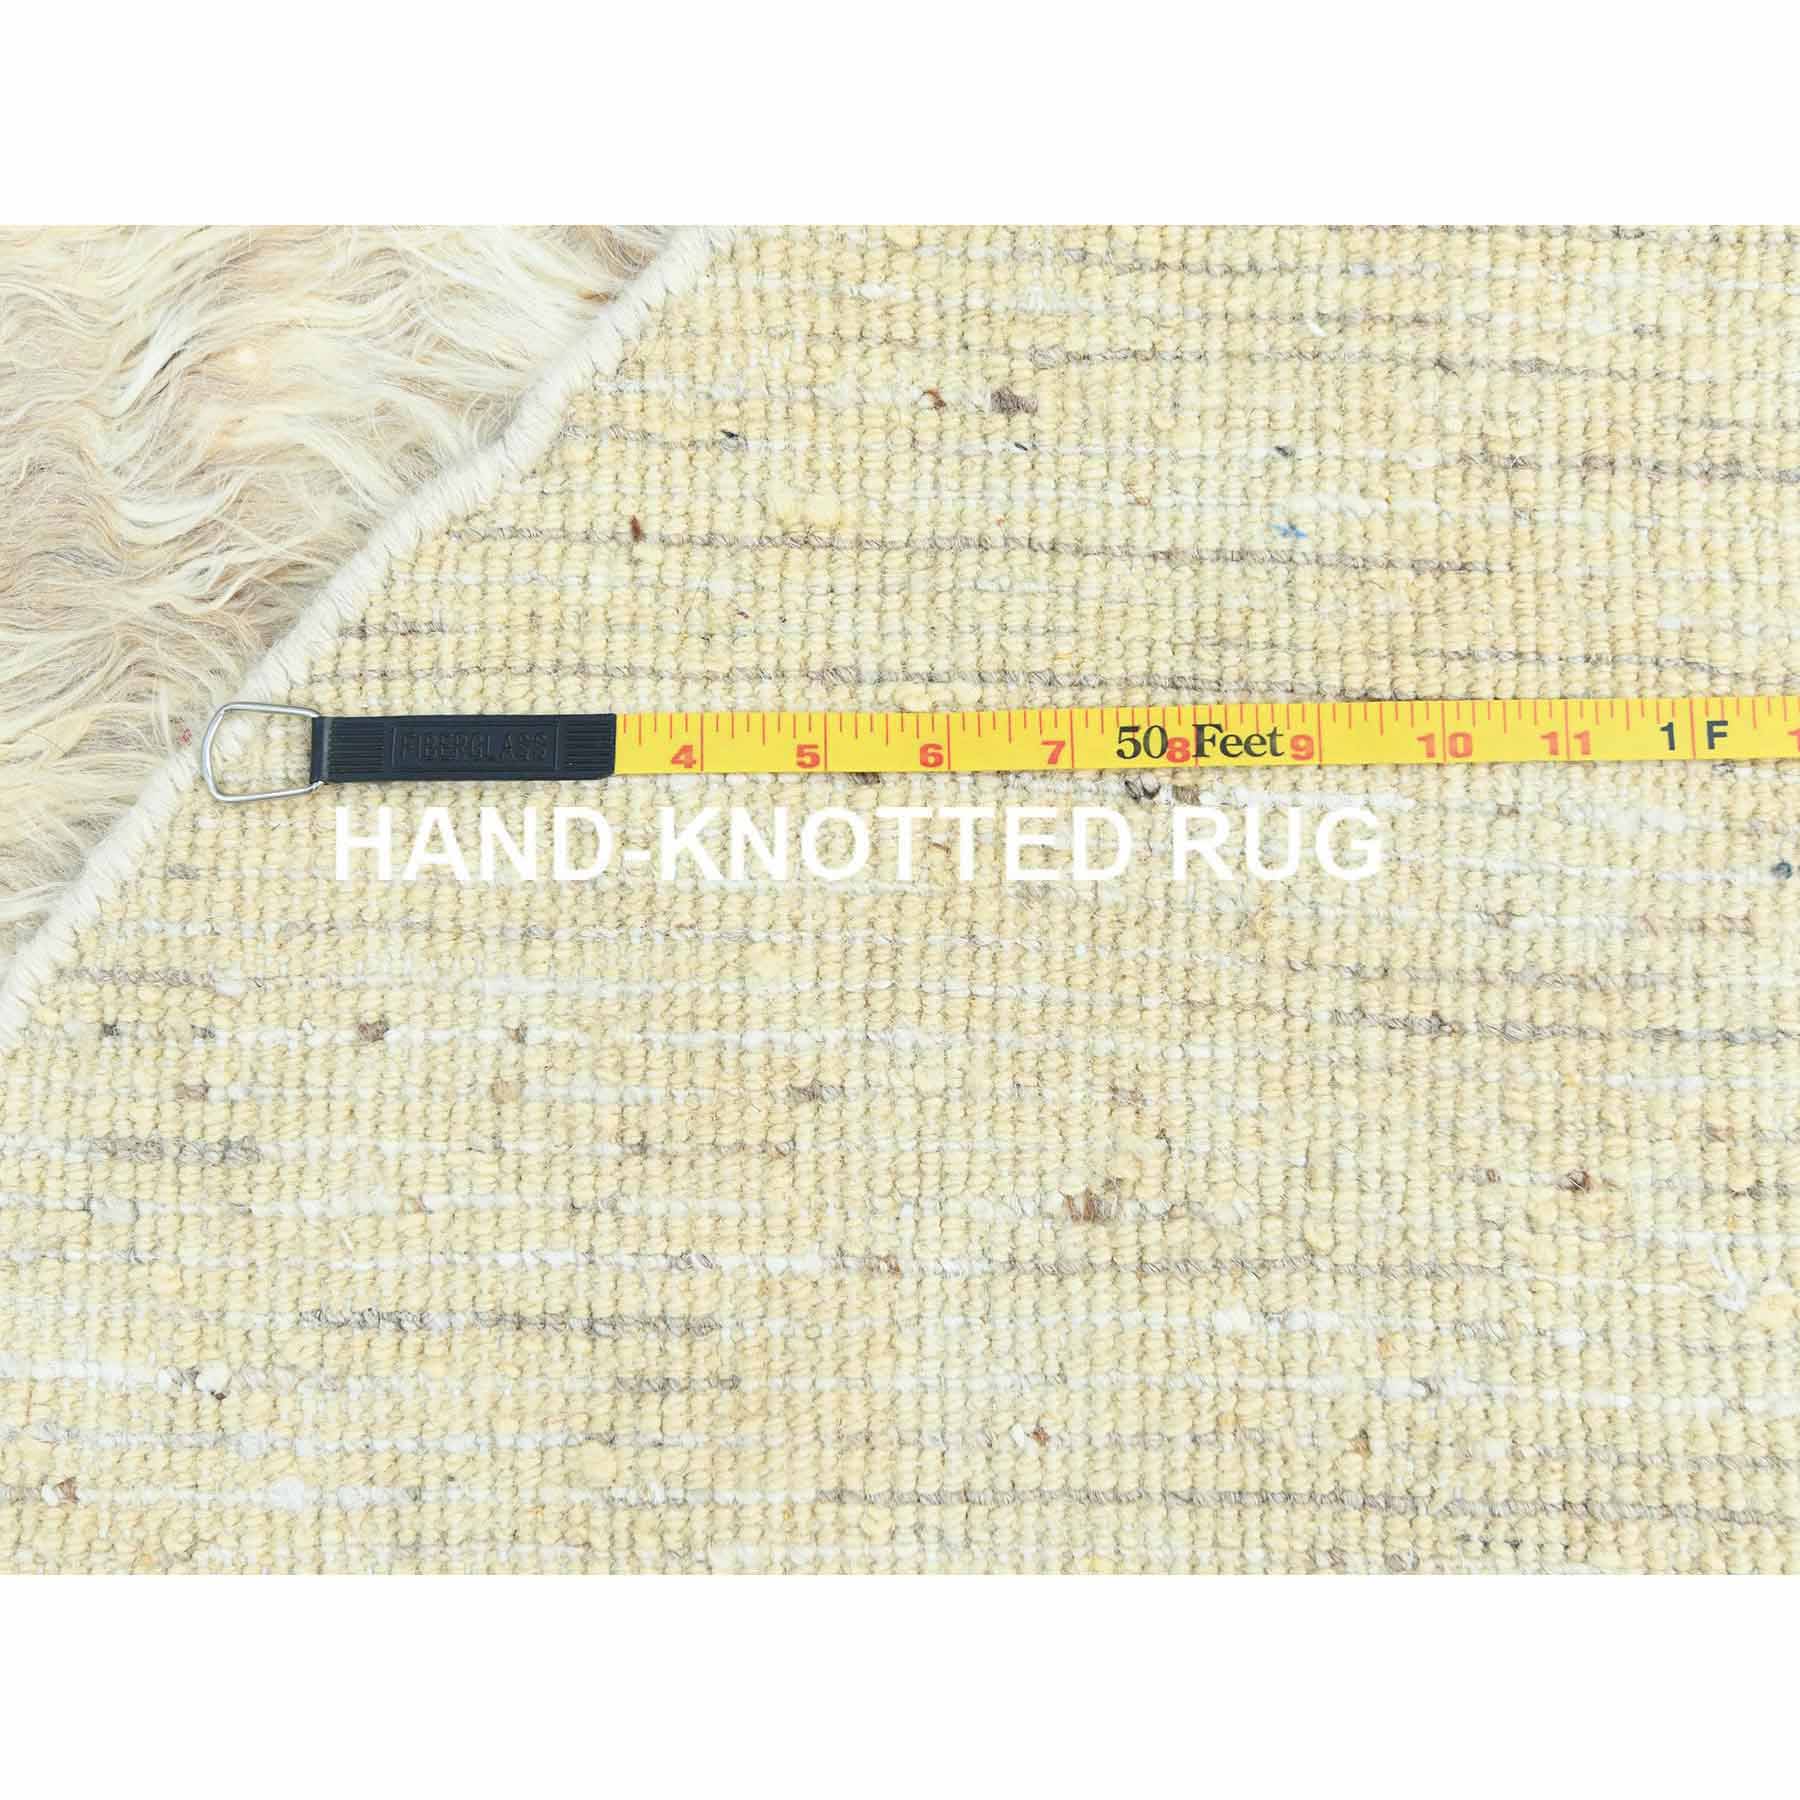 Tribal-Geometric-Hand-Knotted-Rug-414925